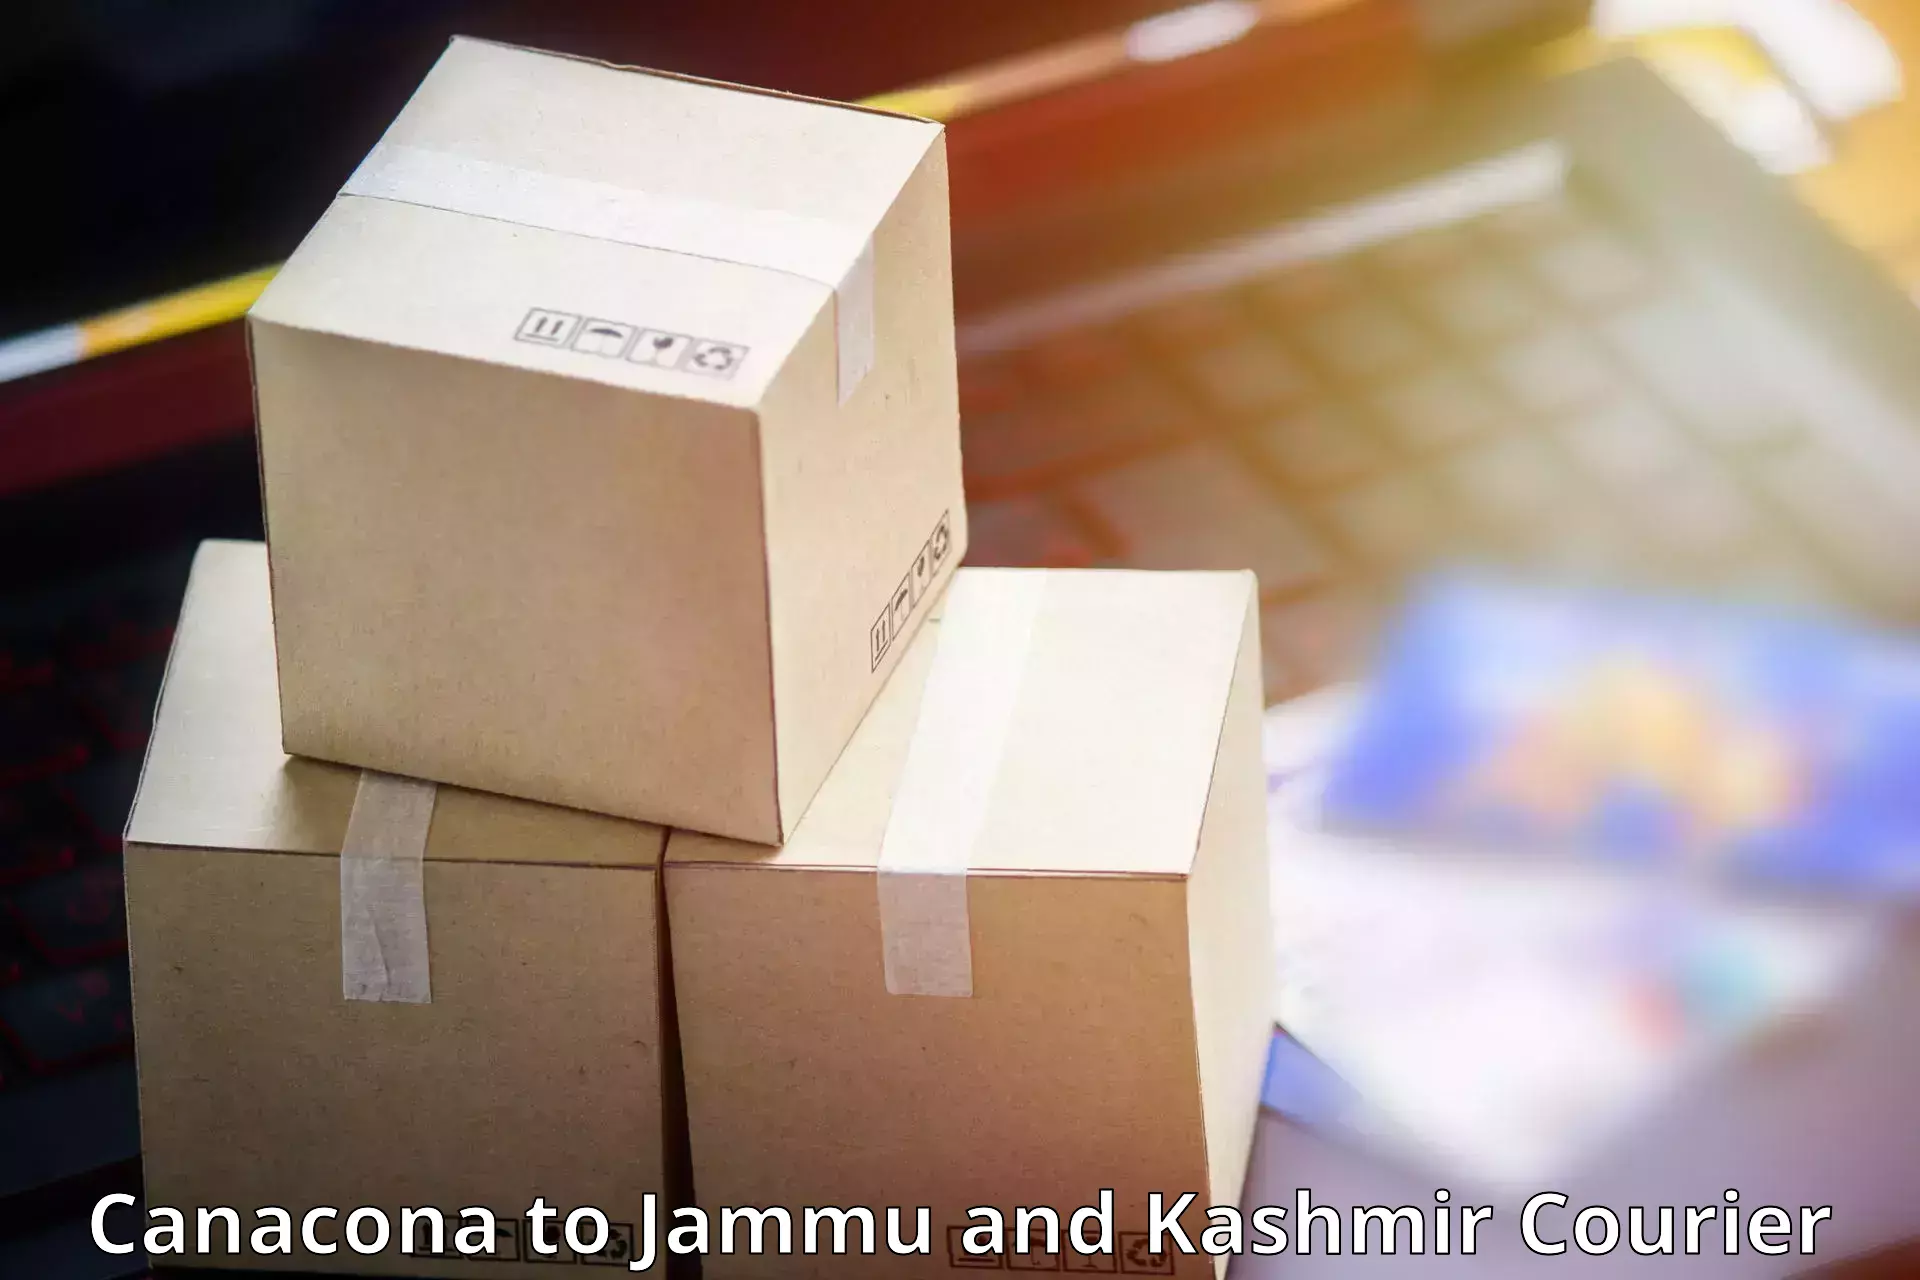 Premium courier solutions Canacona to Kulgam